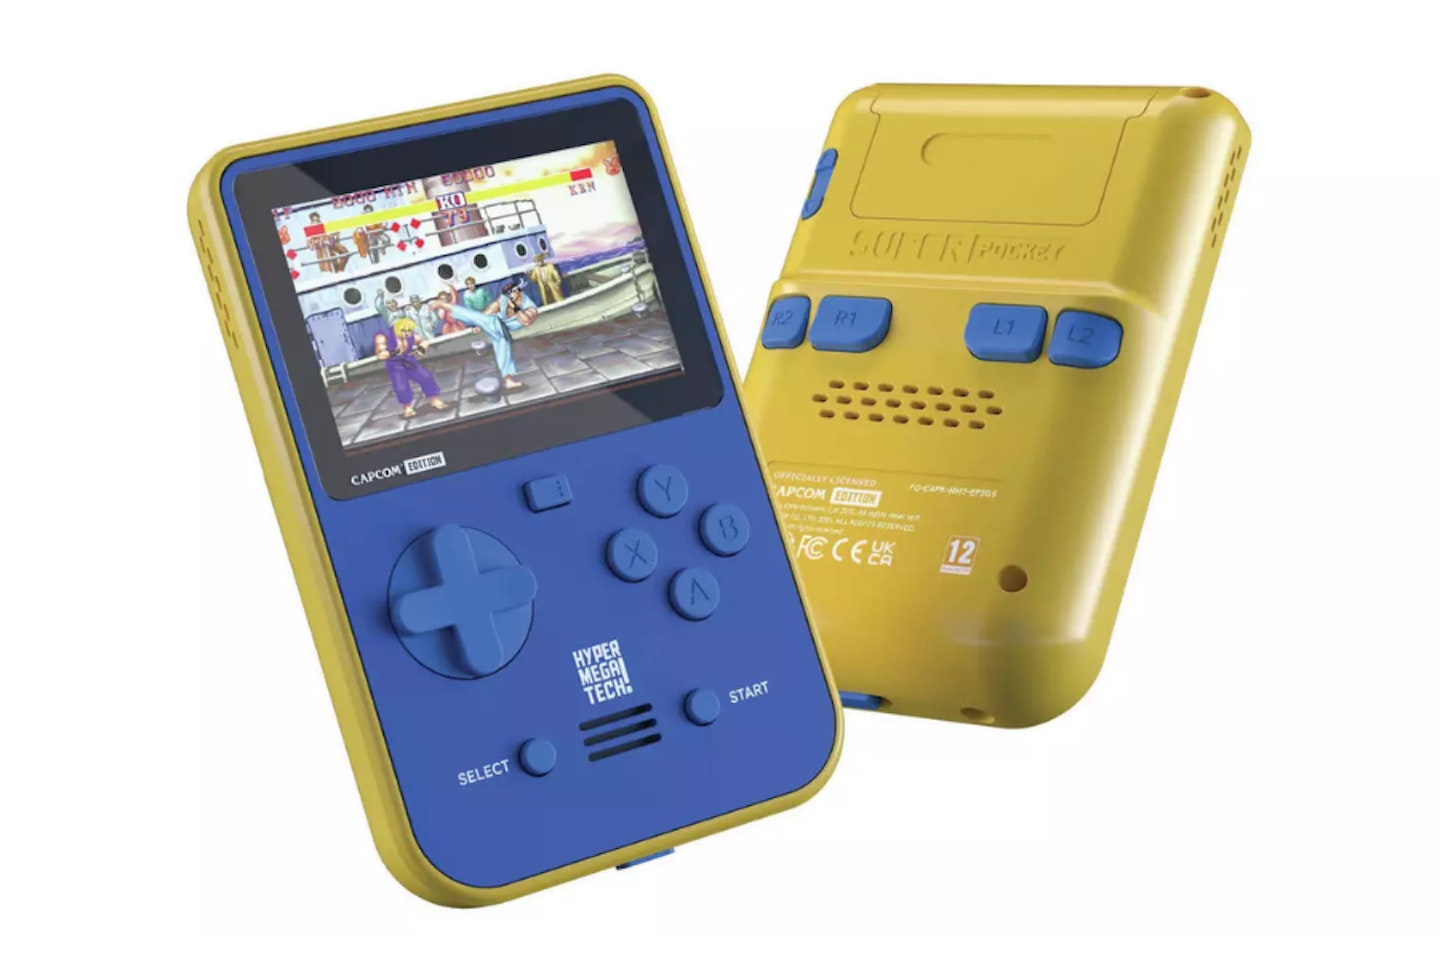 Hyper Mega Tech Capcom Super Pocket -  one of the best retro handheld game consoles